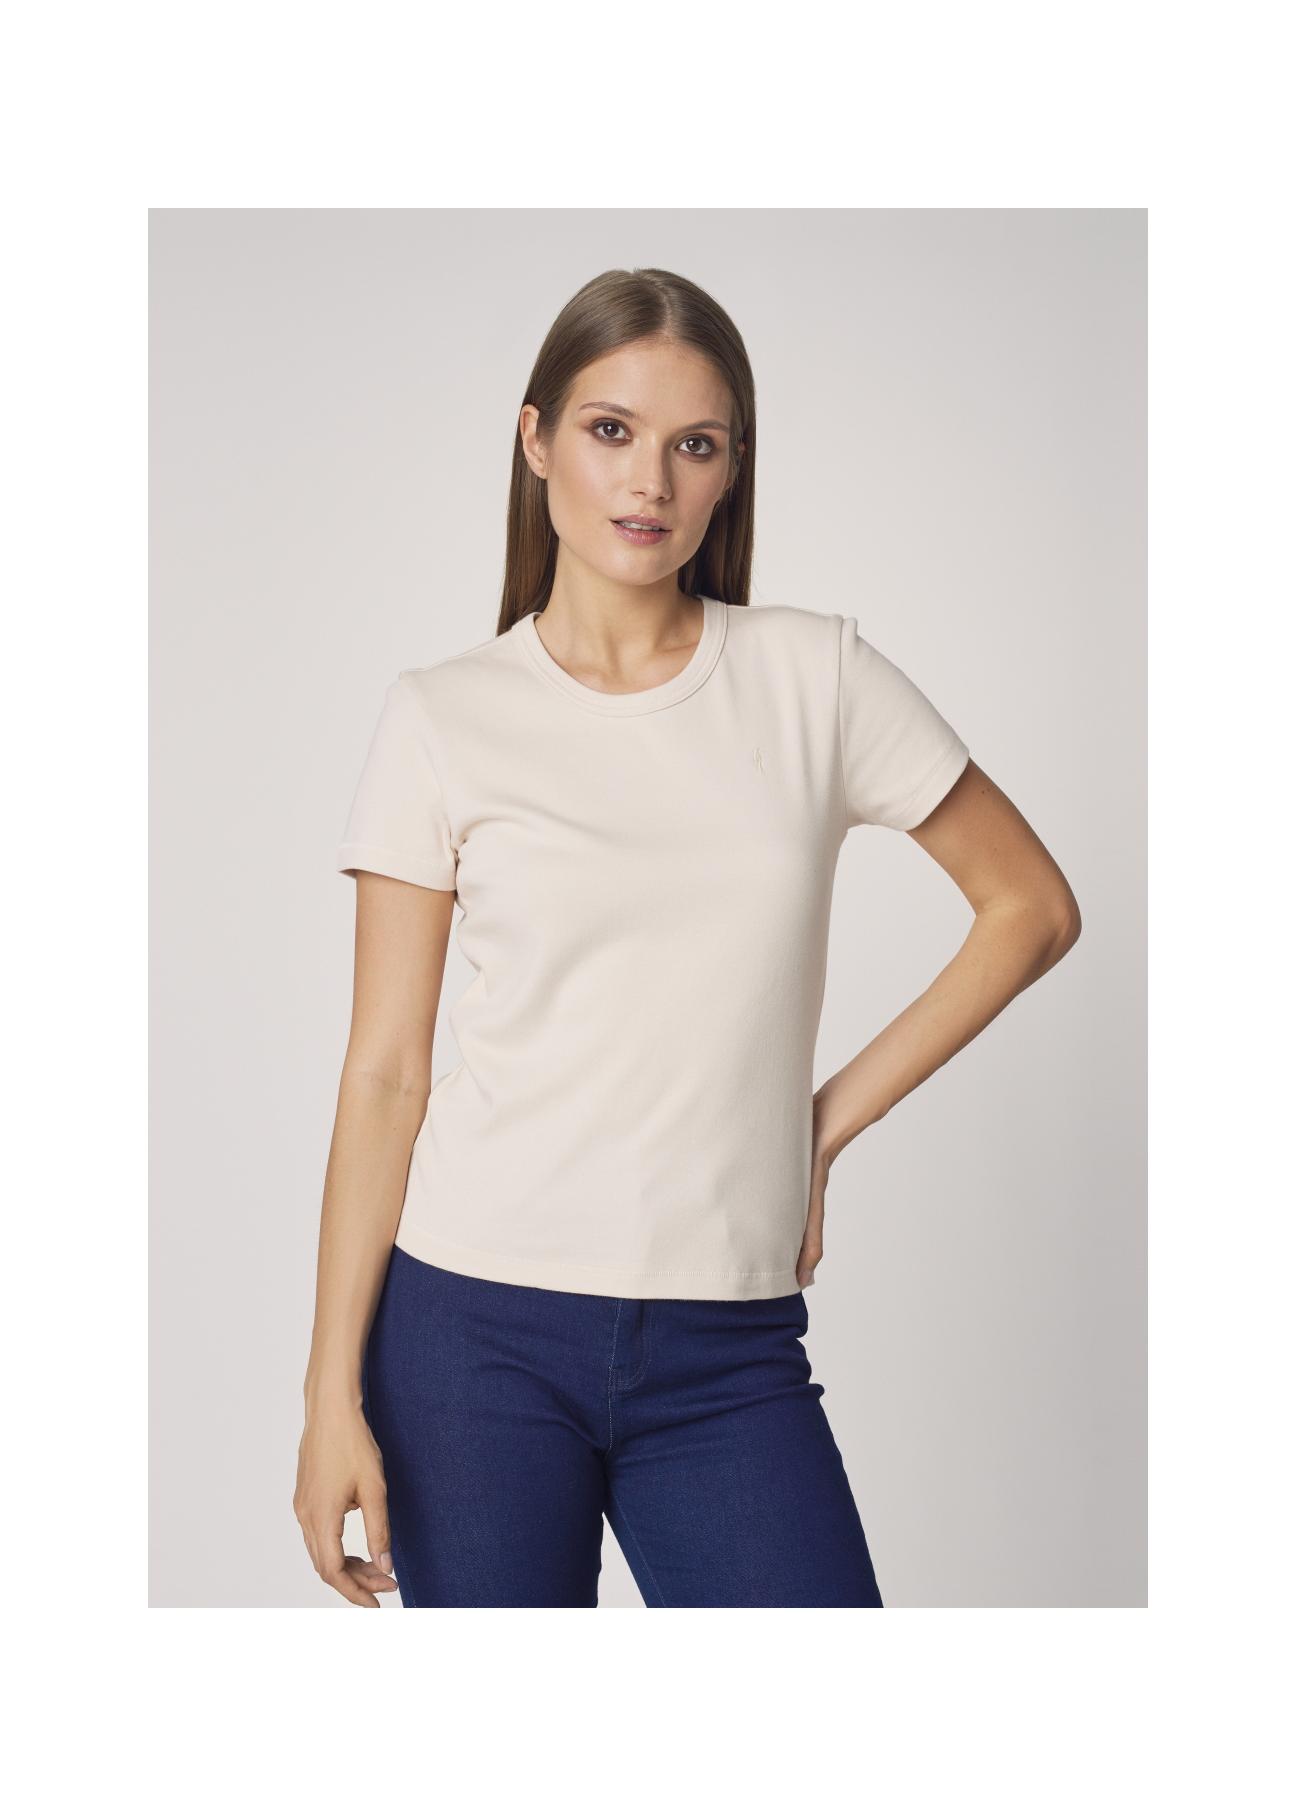 Beżowy T-shirt basic damski TSHDT-0076-81(Z21)